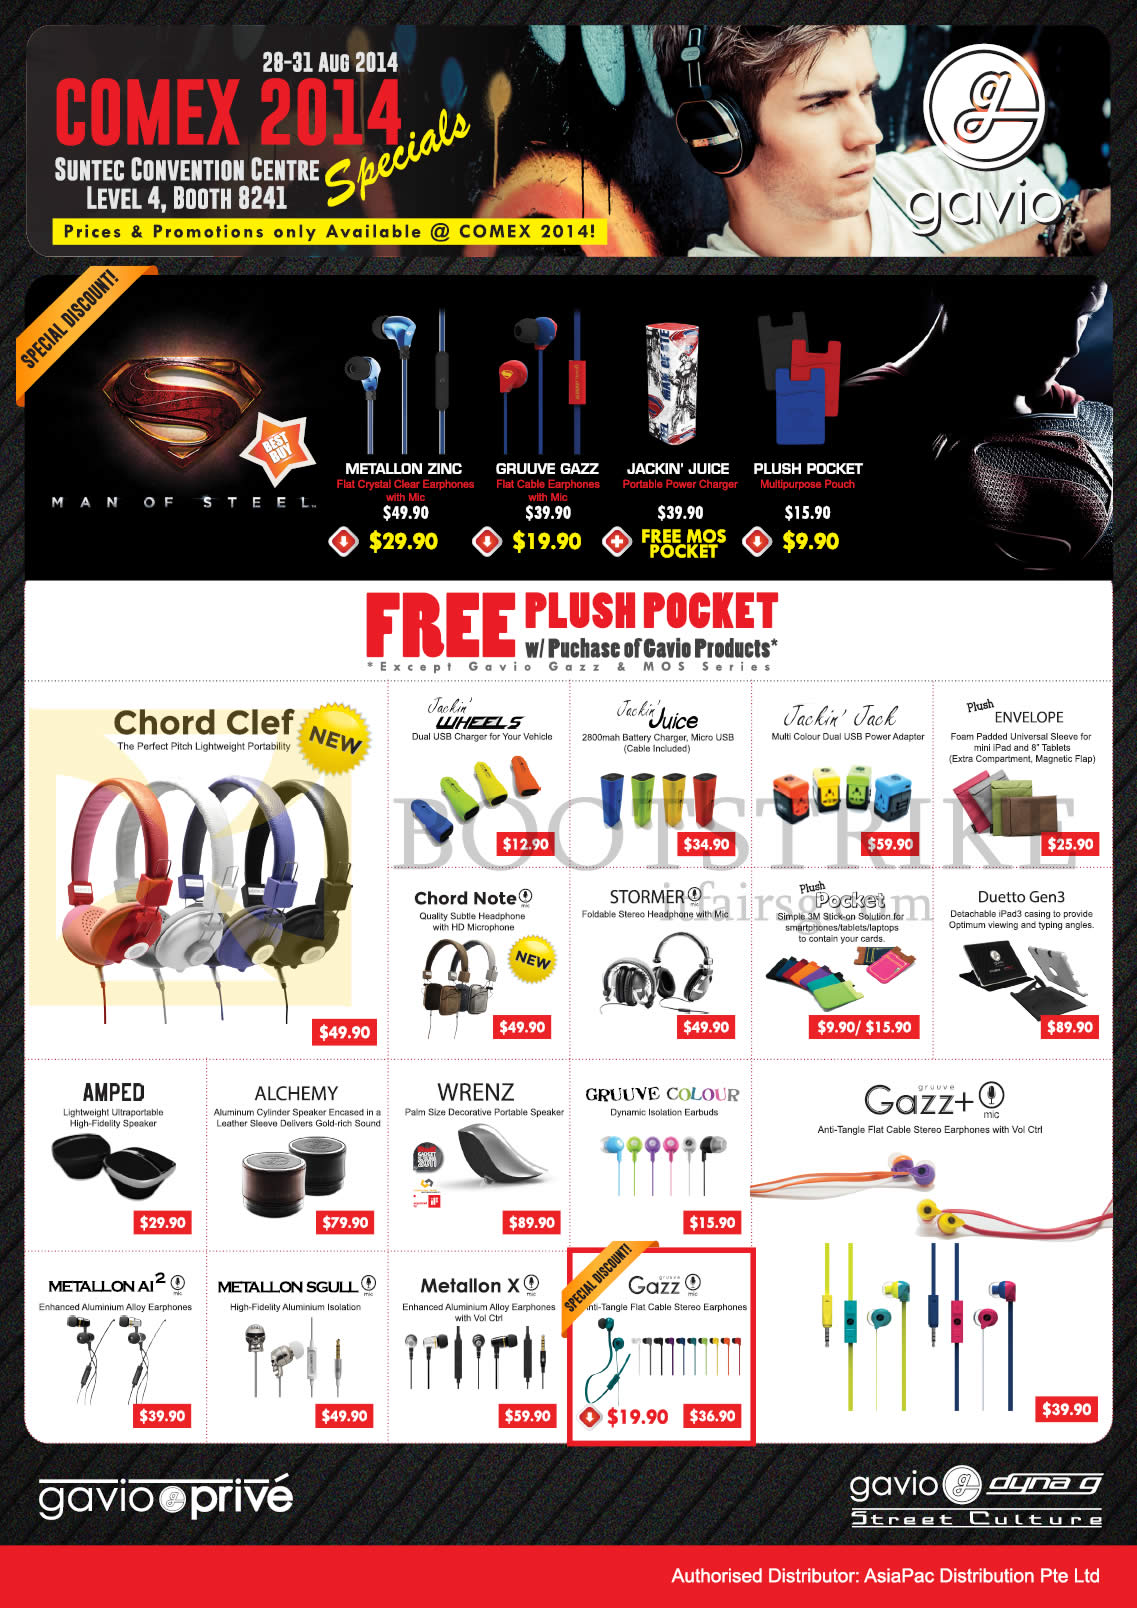 COMEX 2014 price list image brochure of Newstead Gavio Prive Headphones, USB Chargers, Speakers, Earphones, Plush Envelope Tablet Sleeve, IPad Case